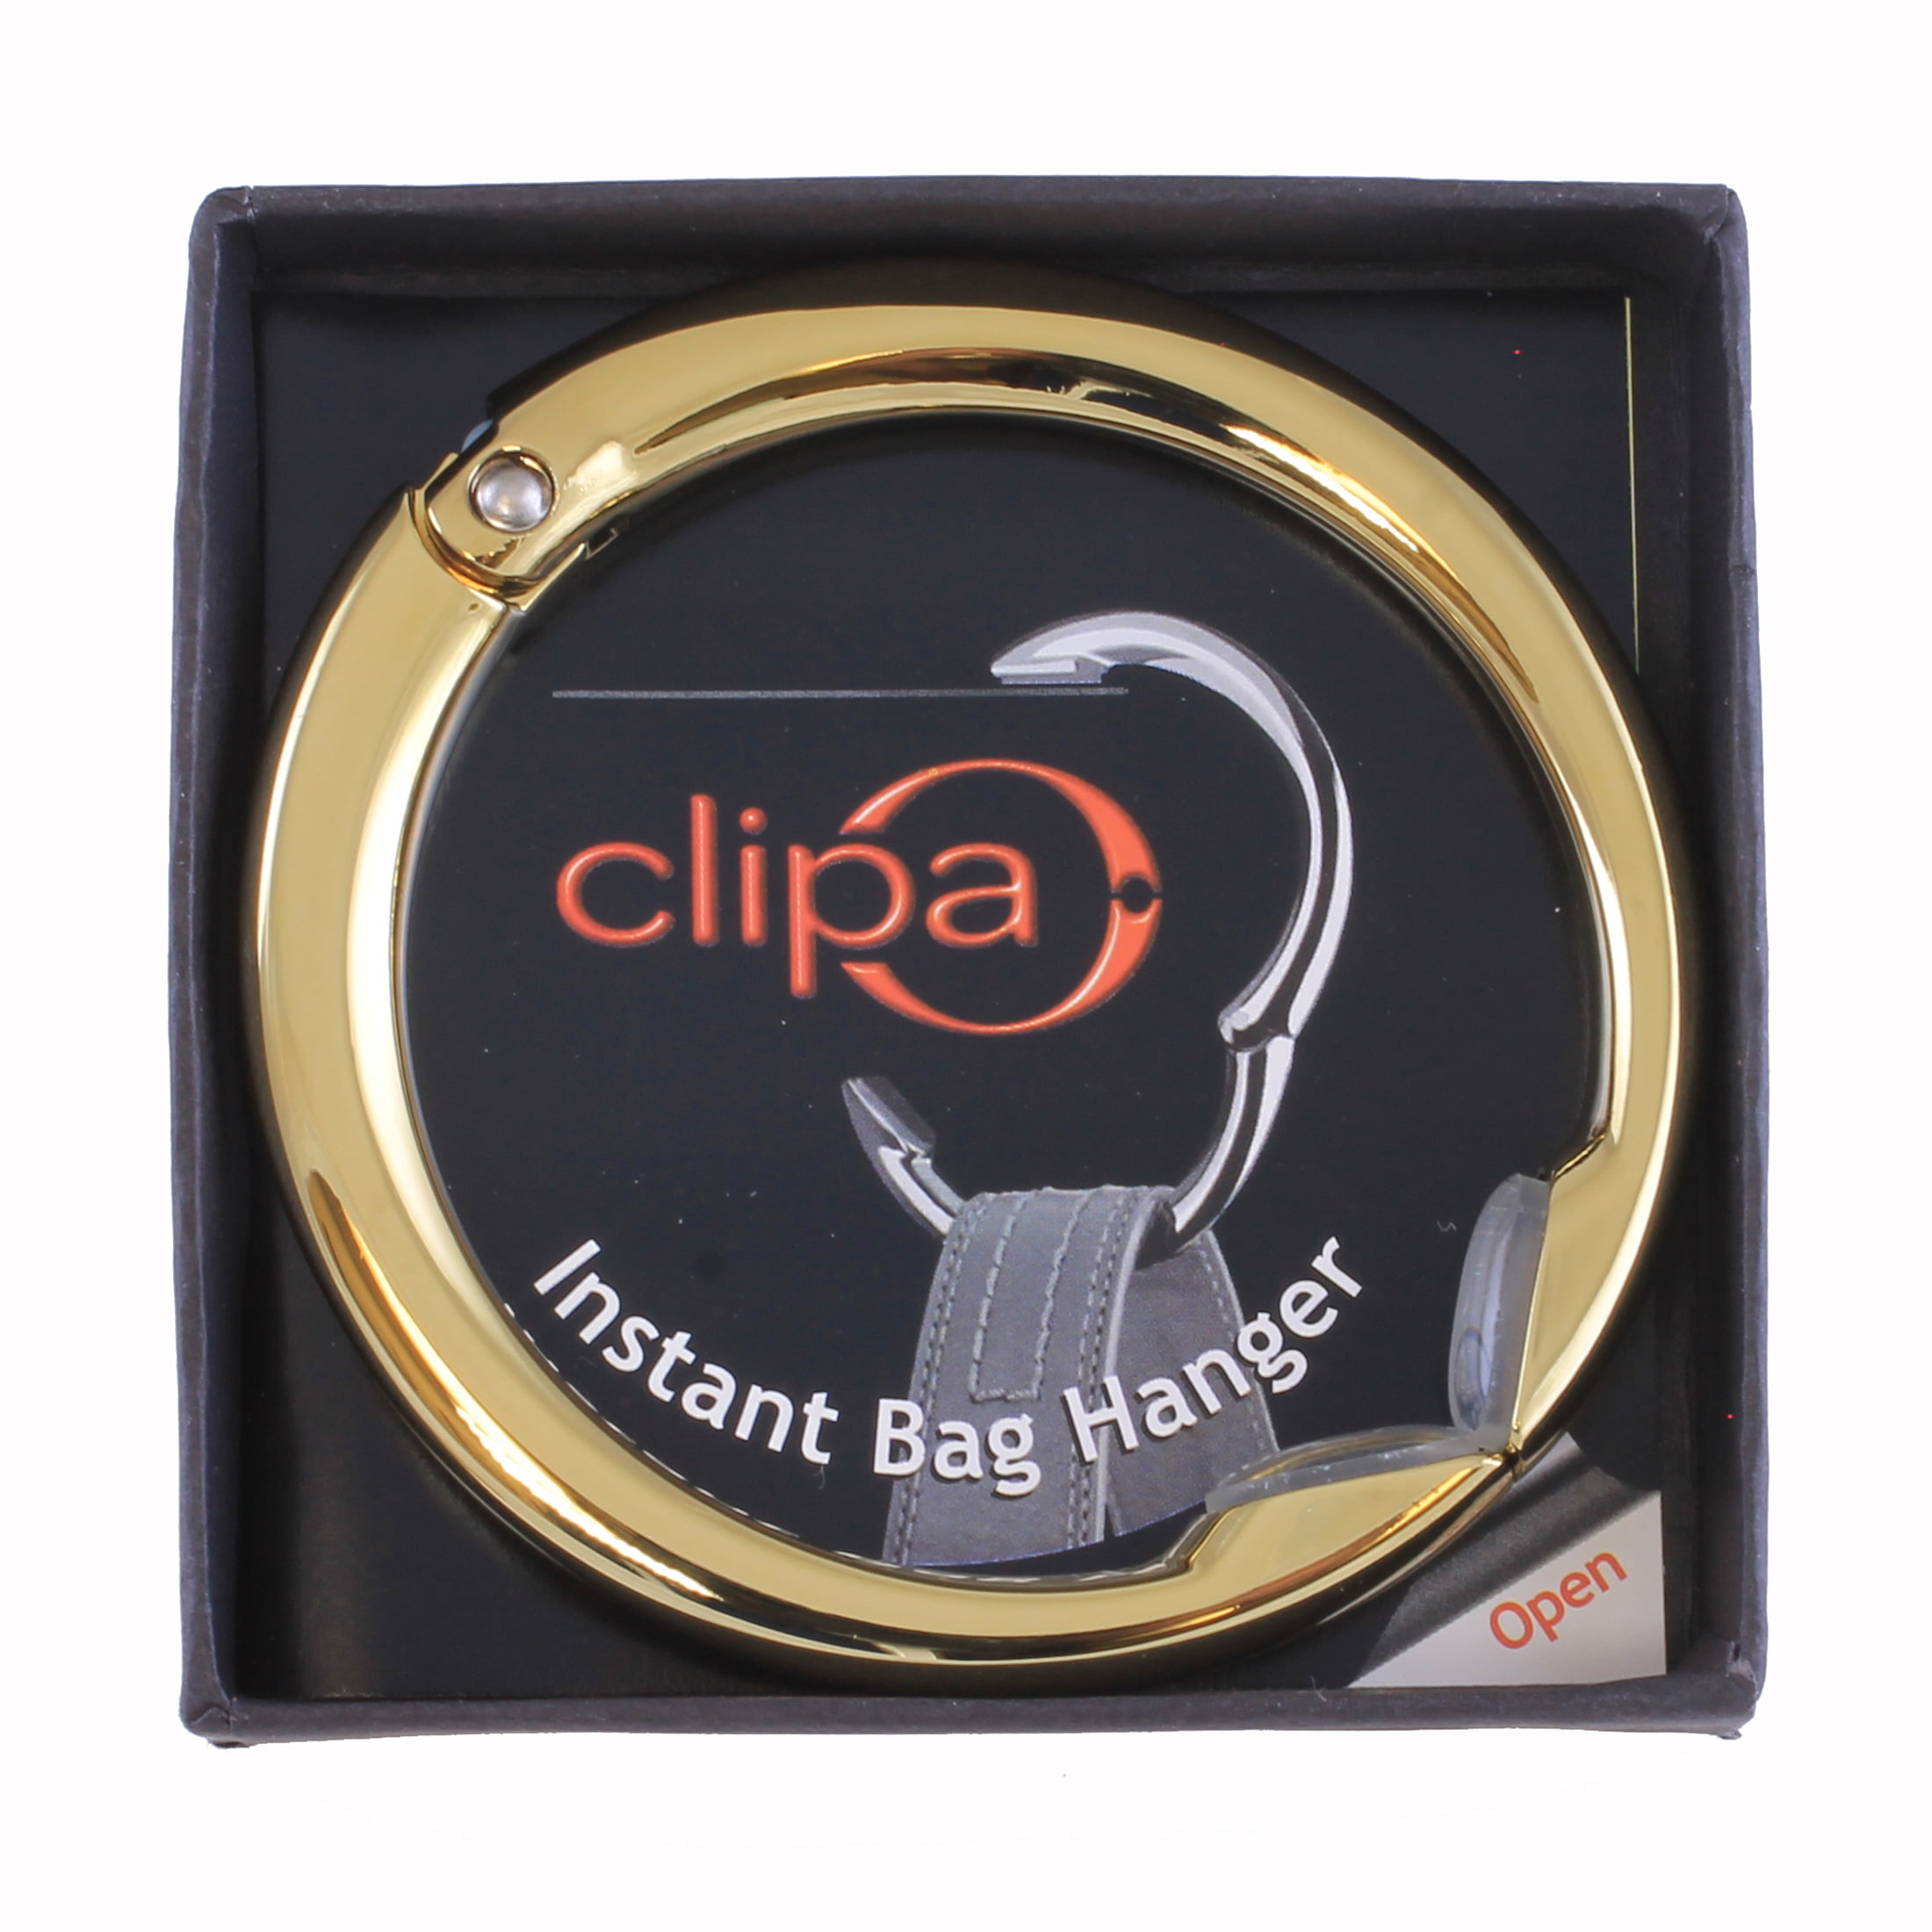 Clipa Bag Hanger: Perfect Travel Companion [PLUS GIVEAWAY